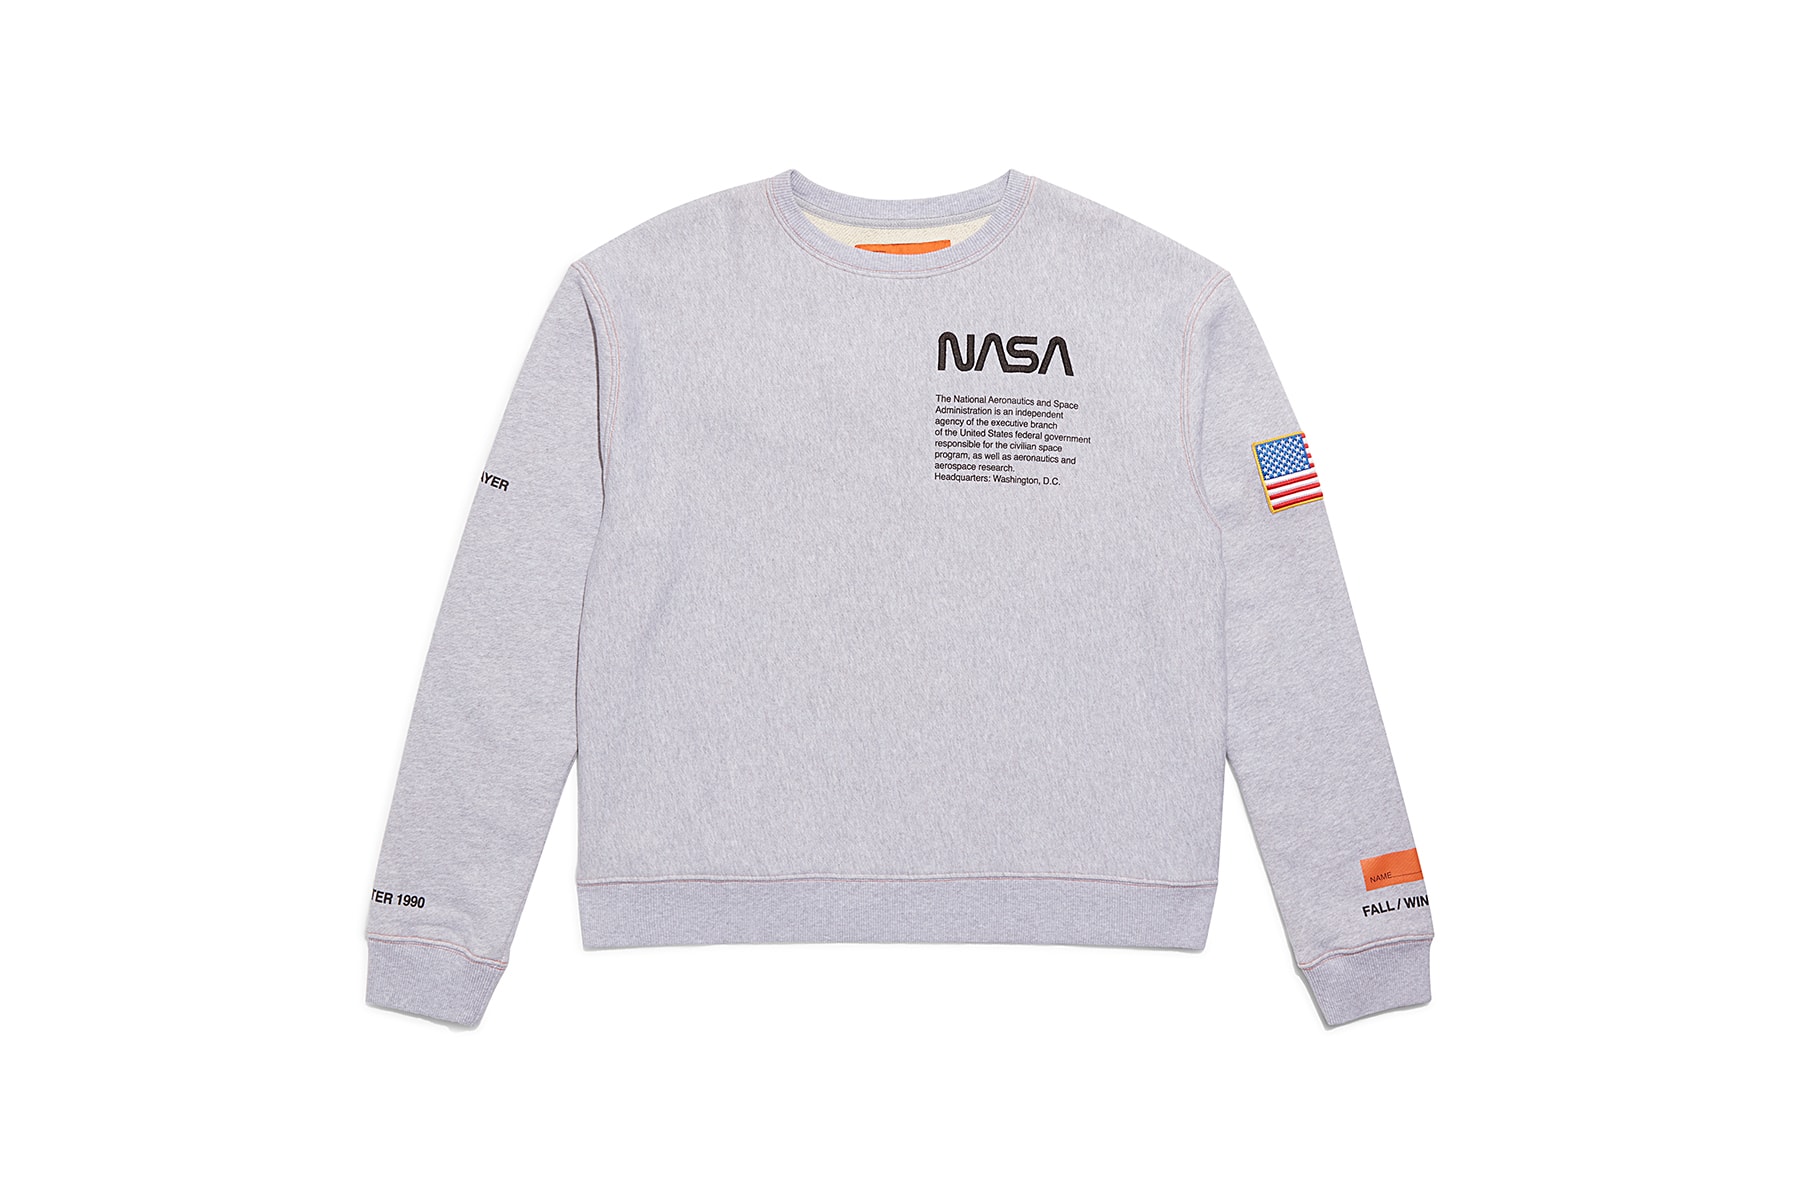 heron preston public figure fall winter 2018 collaboration grey sweater pullover logo american flag nasa